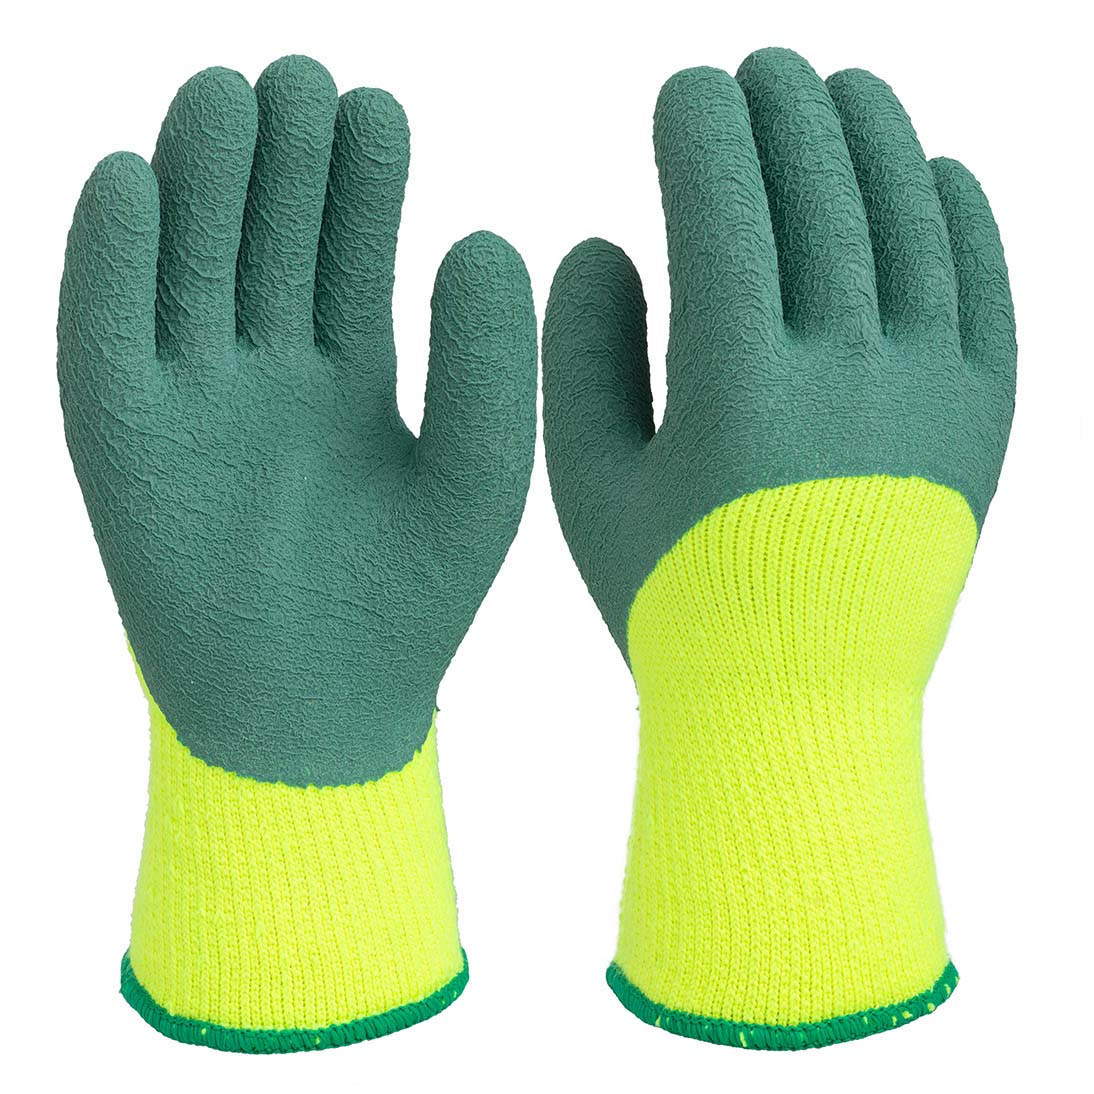 7G yellow latex foam gloves | 7G green half coated gloves | 7G half coated gloves